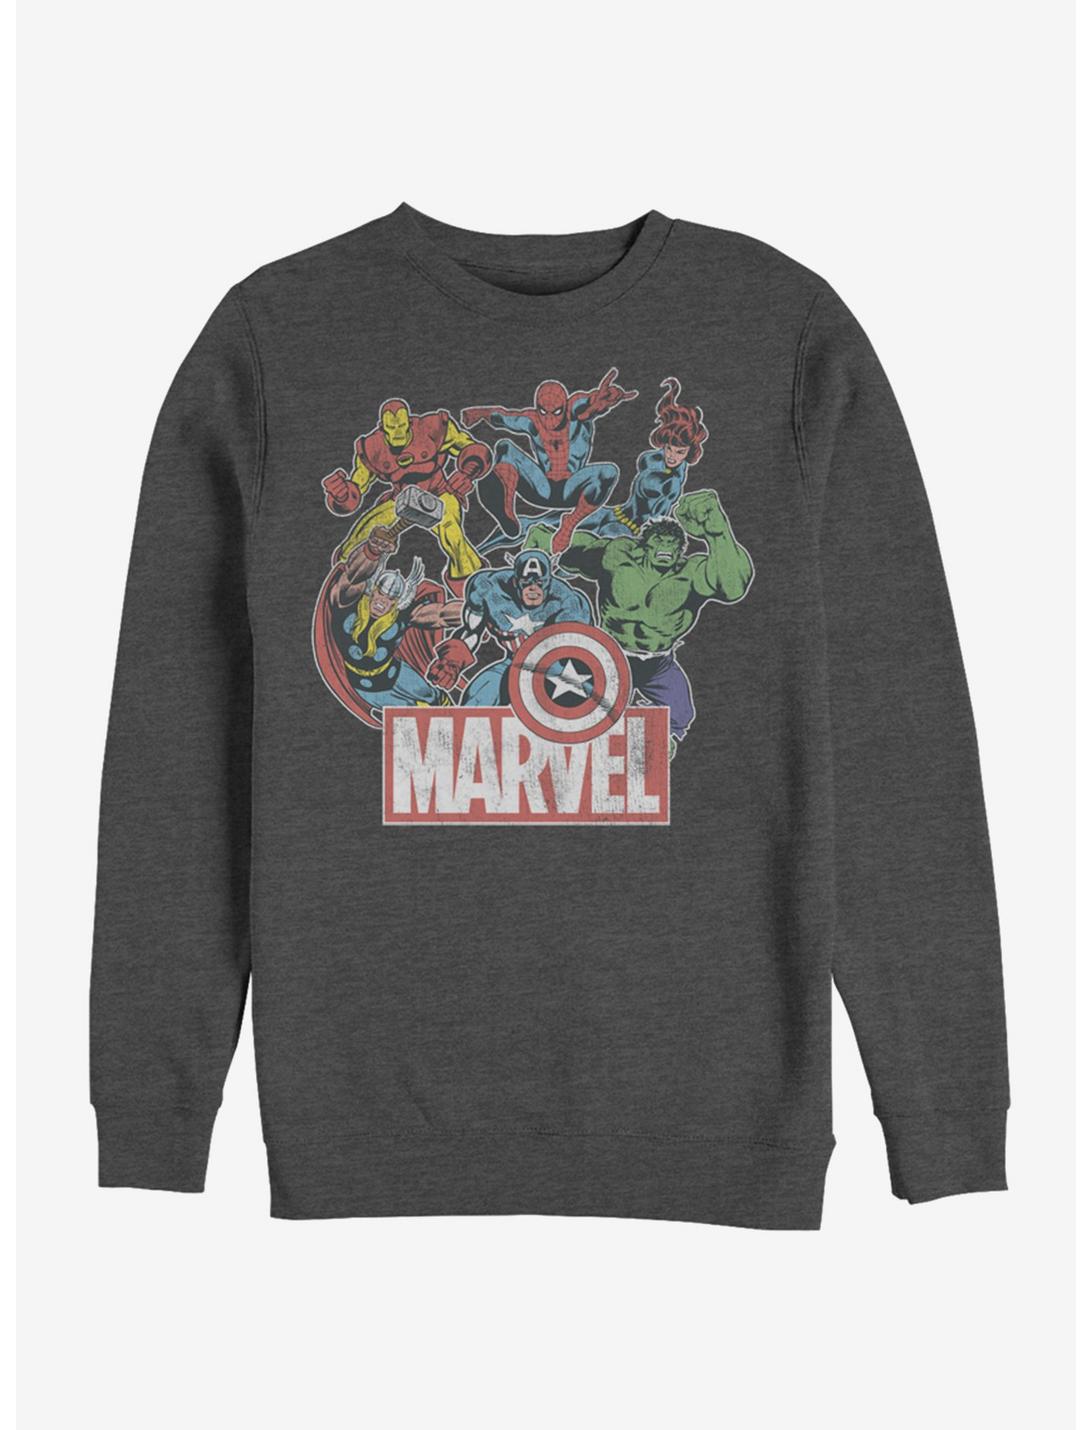 Marvel Heroes of Today Sweatshirt, CHAR HTR, hi-res